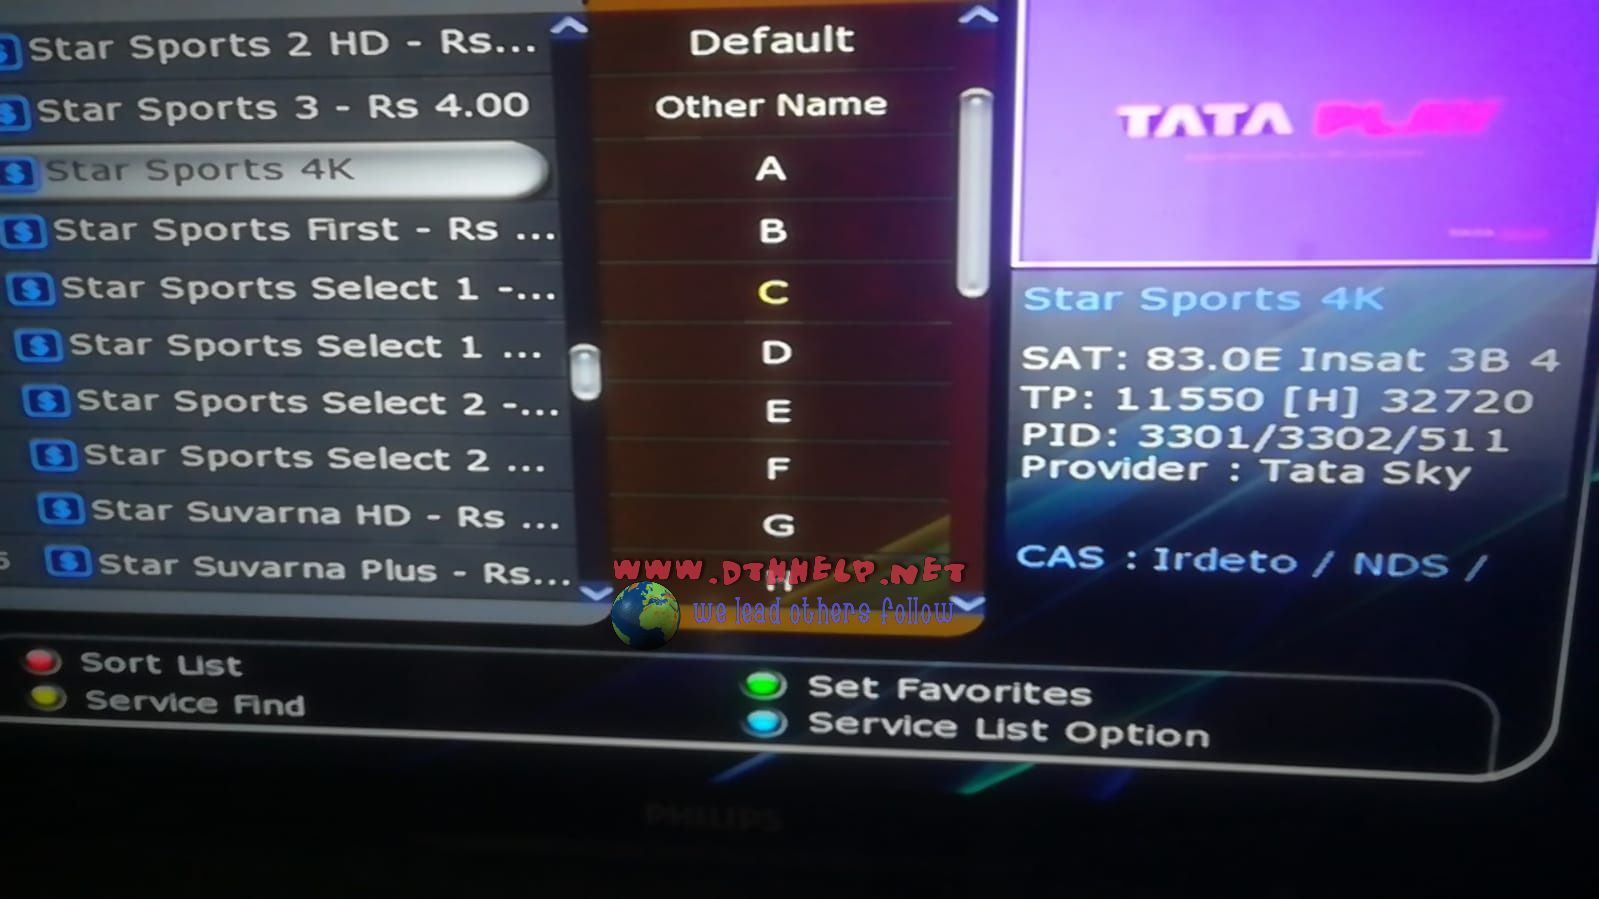 Star Sports 4k from Tata Play STB